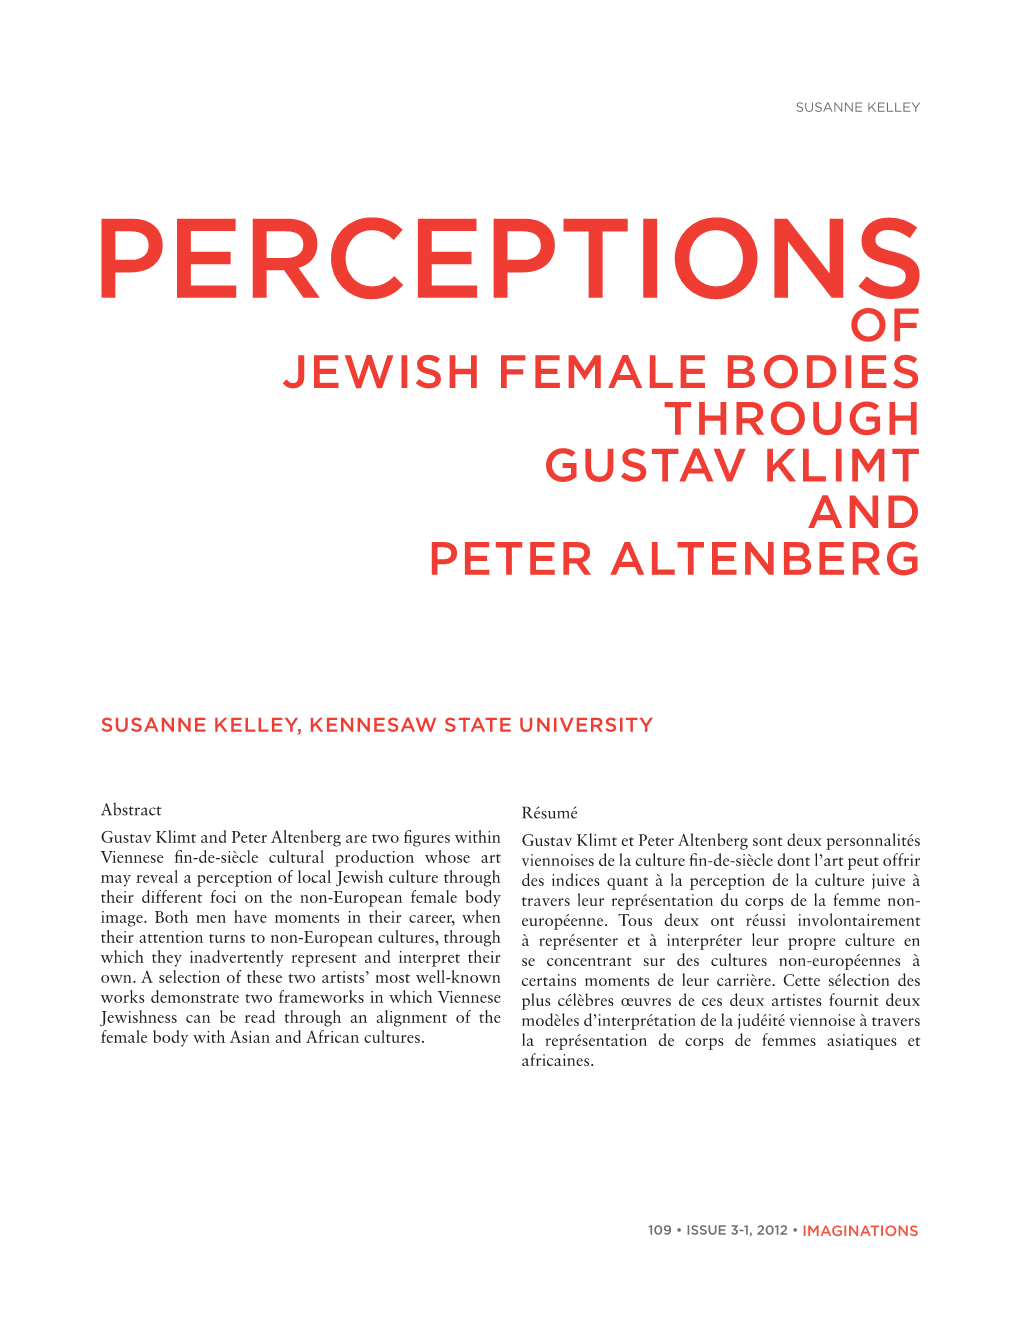 PERCEPTIONS of Jewish Female Bodies Through Gustav Klimt and Peter Altenberg